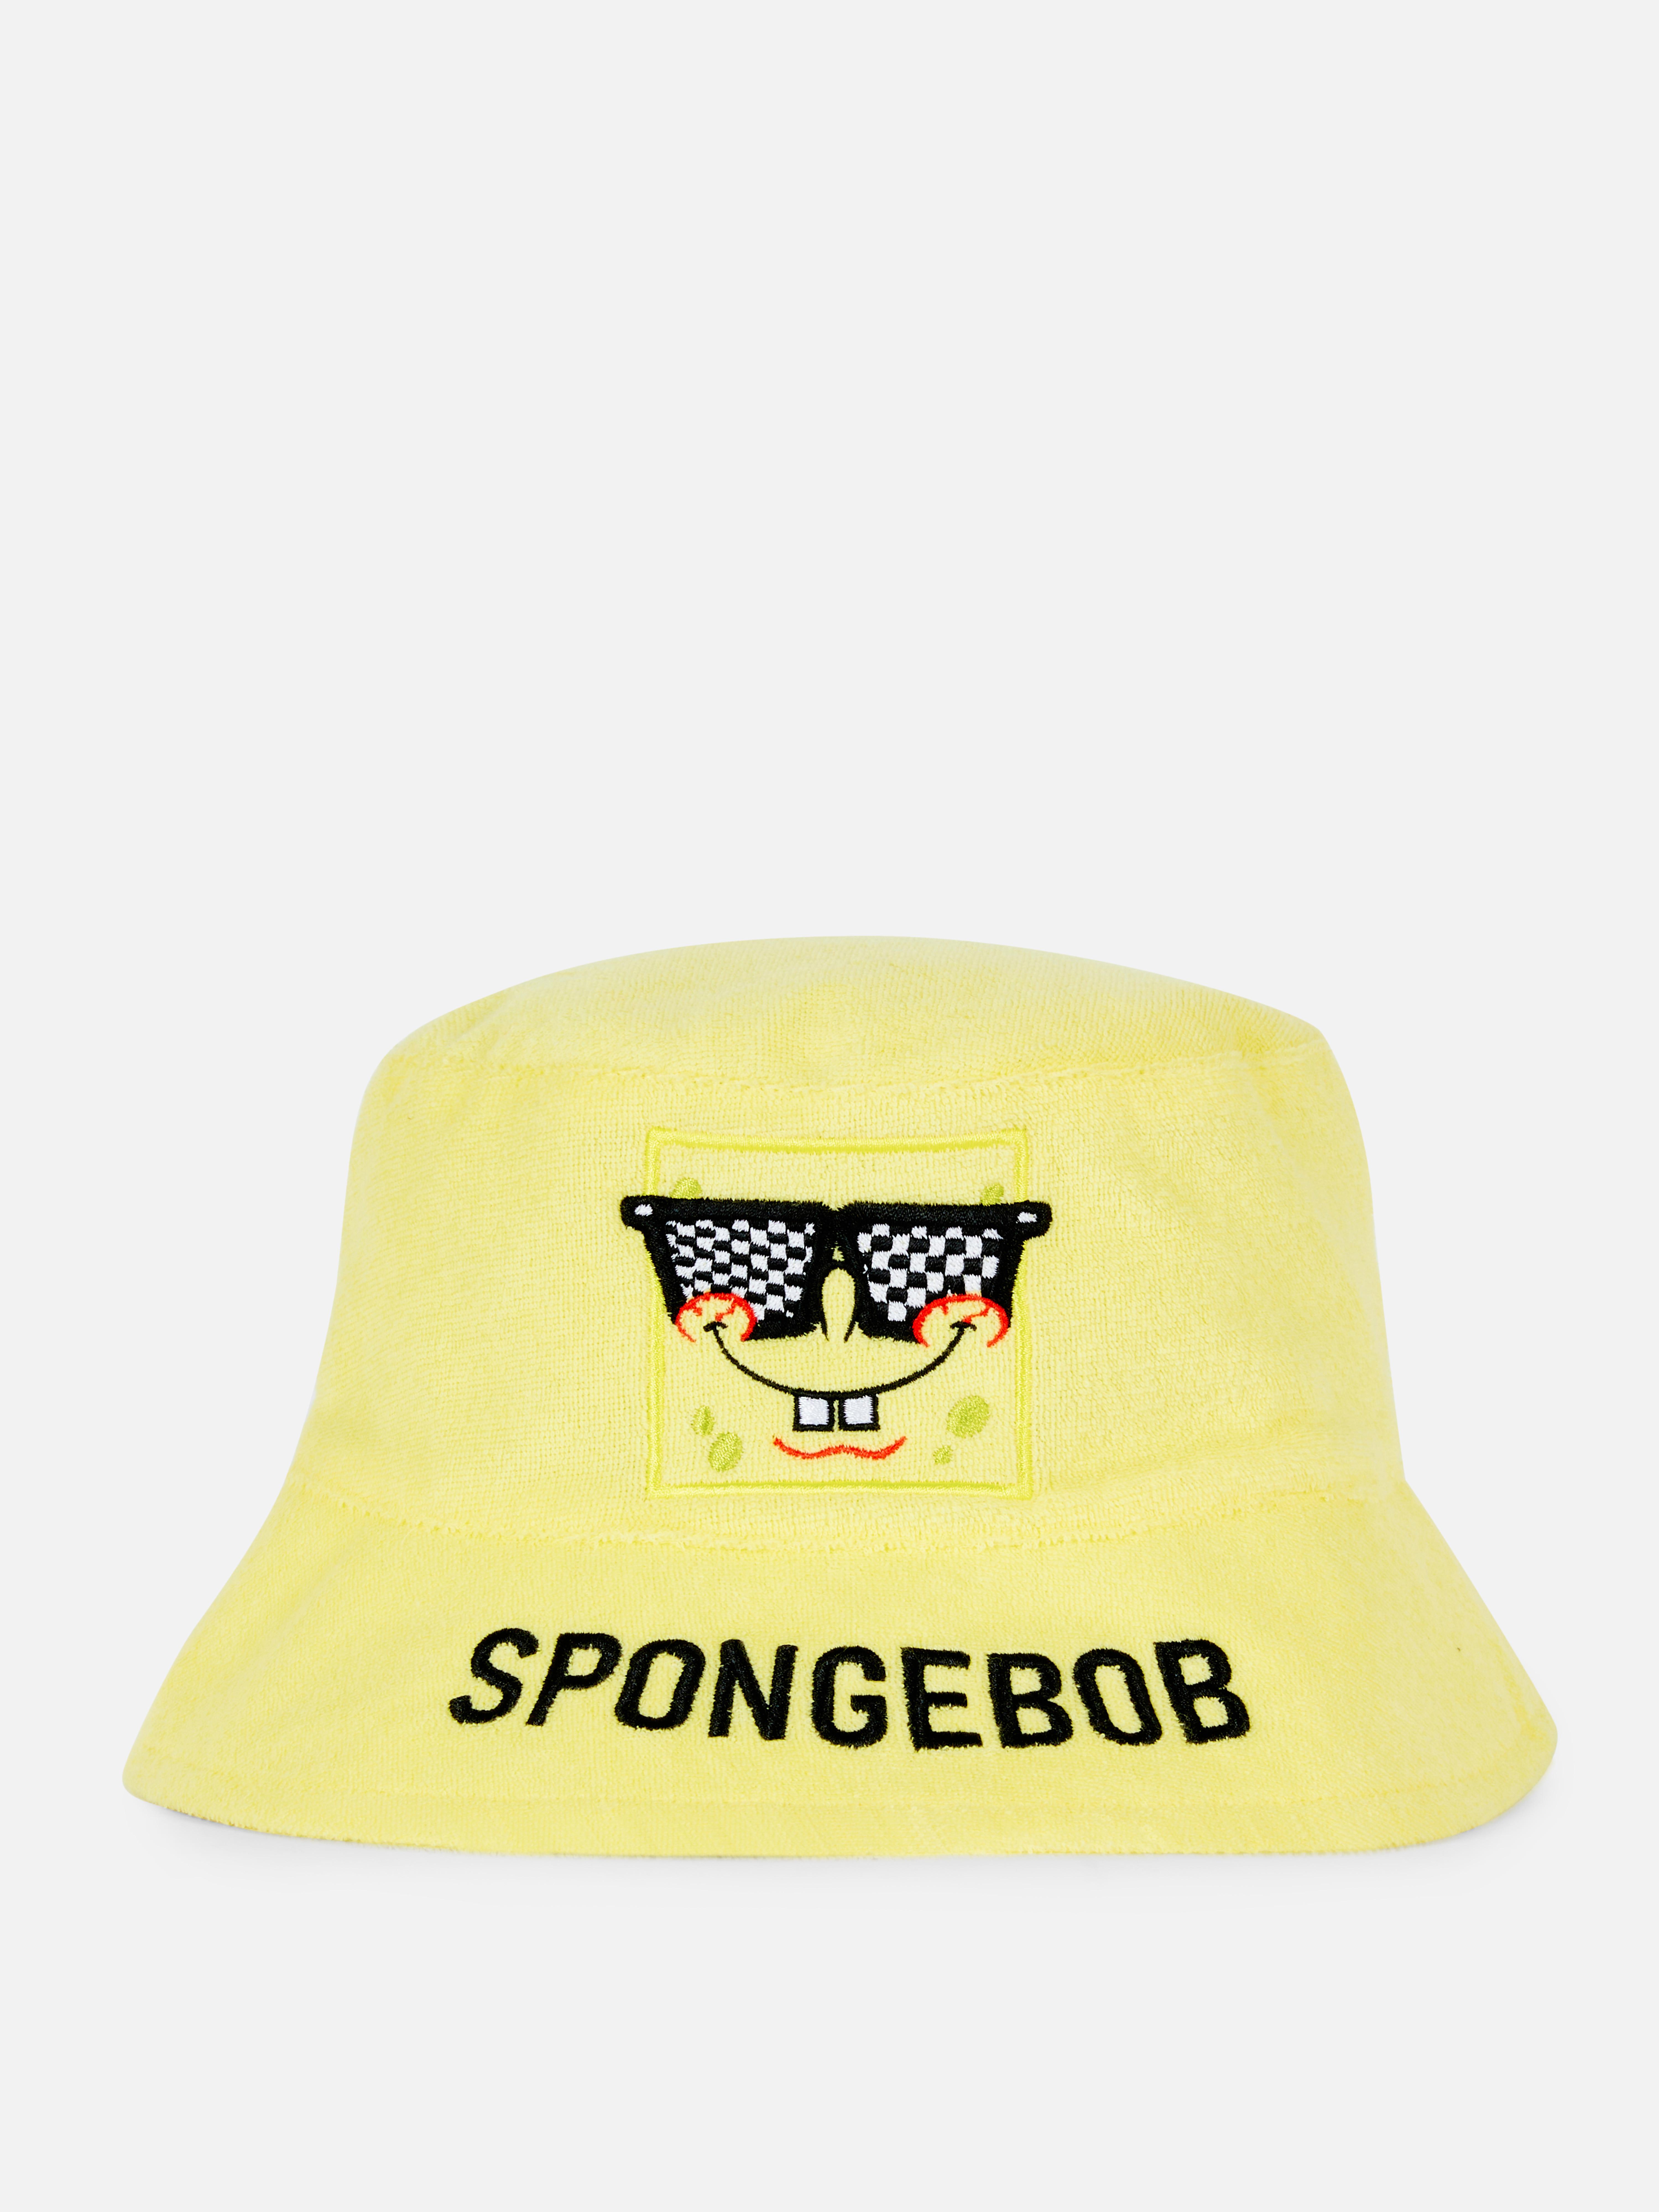 SpongeBob Squarepants Bucket Hat